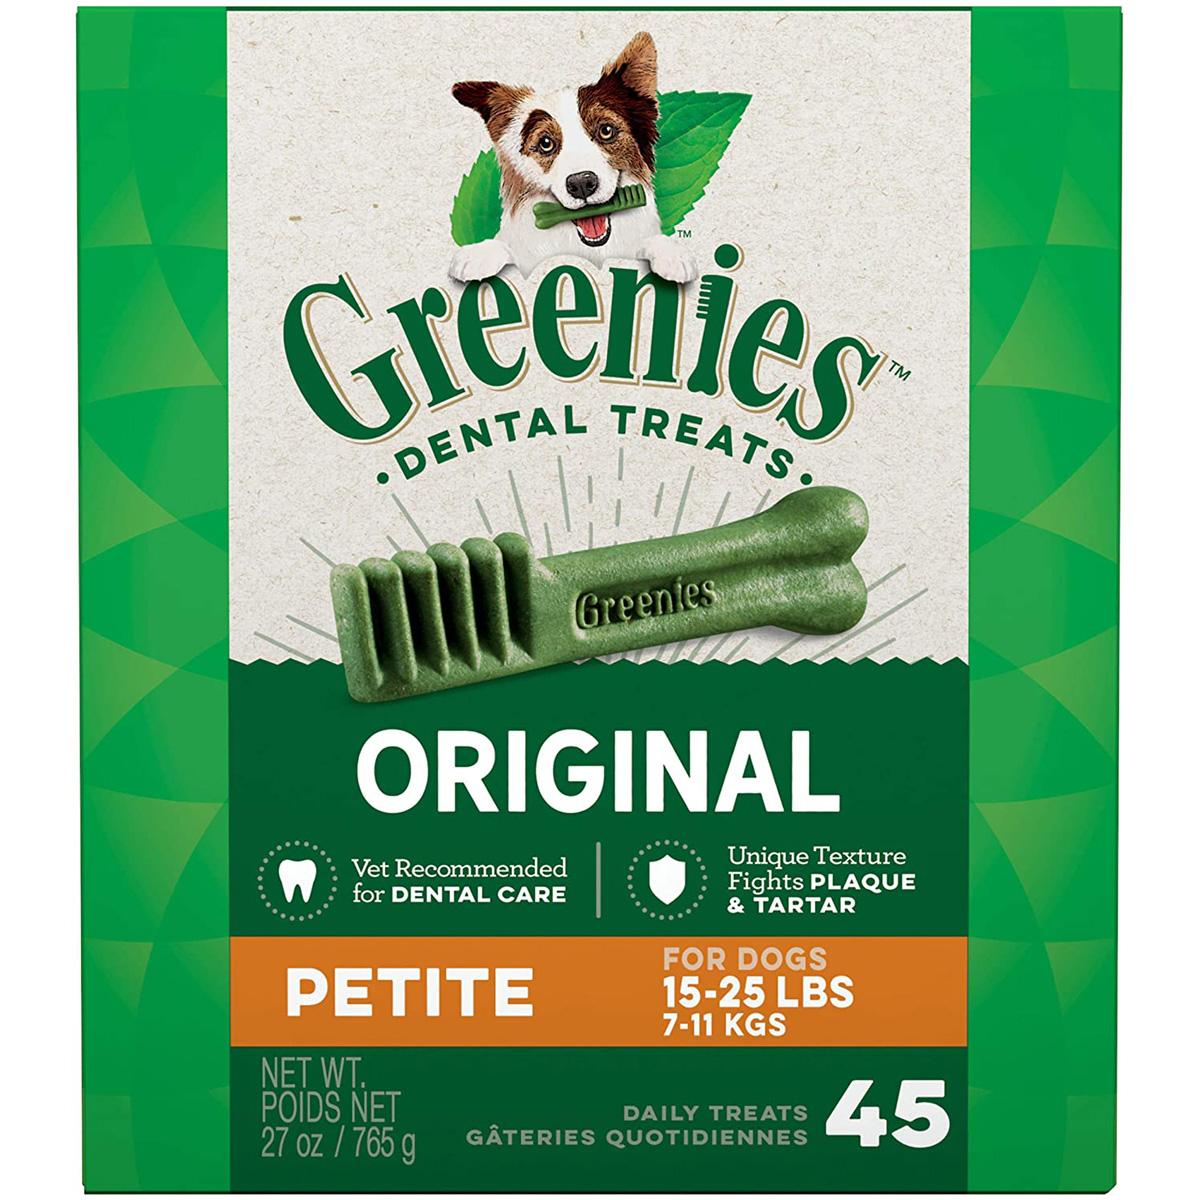 Greenies Original Petite Natural Dental Dog Treats for $16.59 Shipped